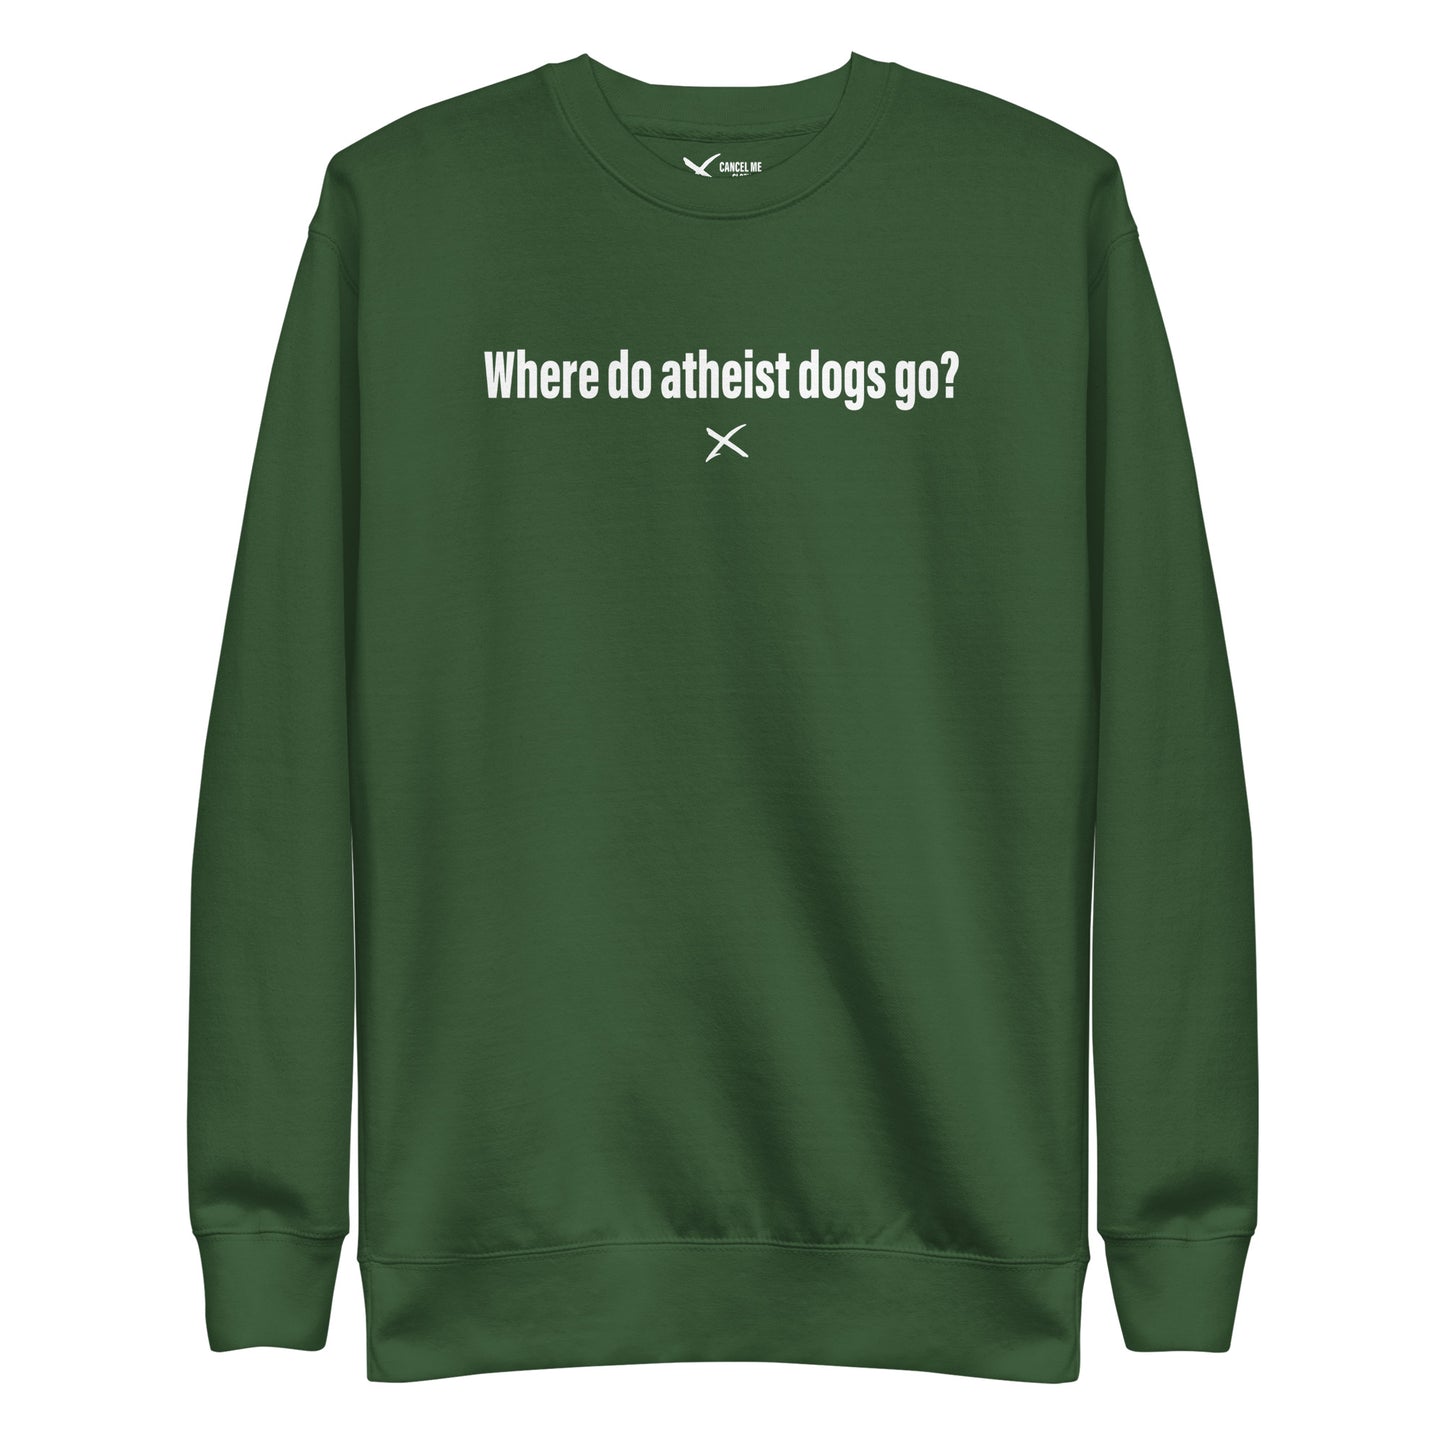 Where do atheist dogs go? - Sweatshirt